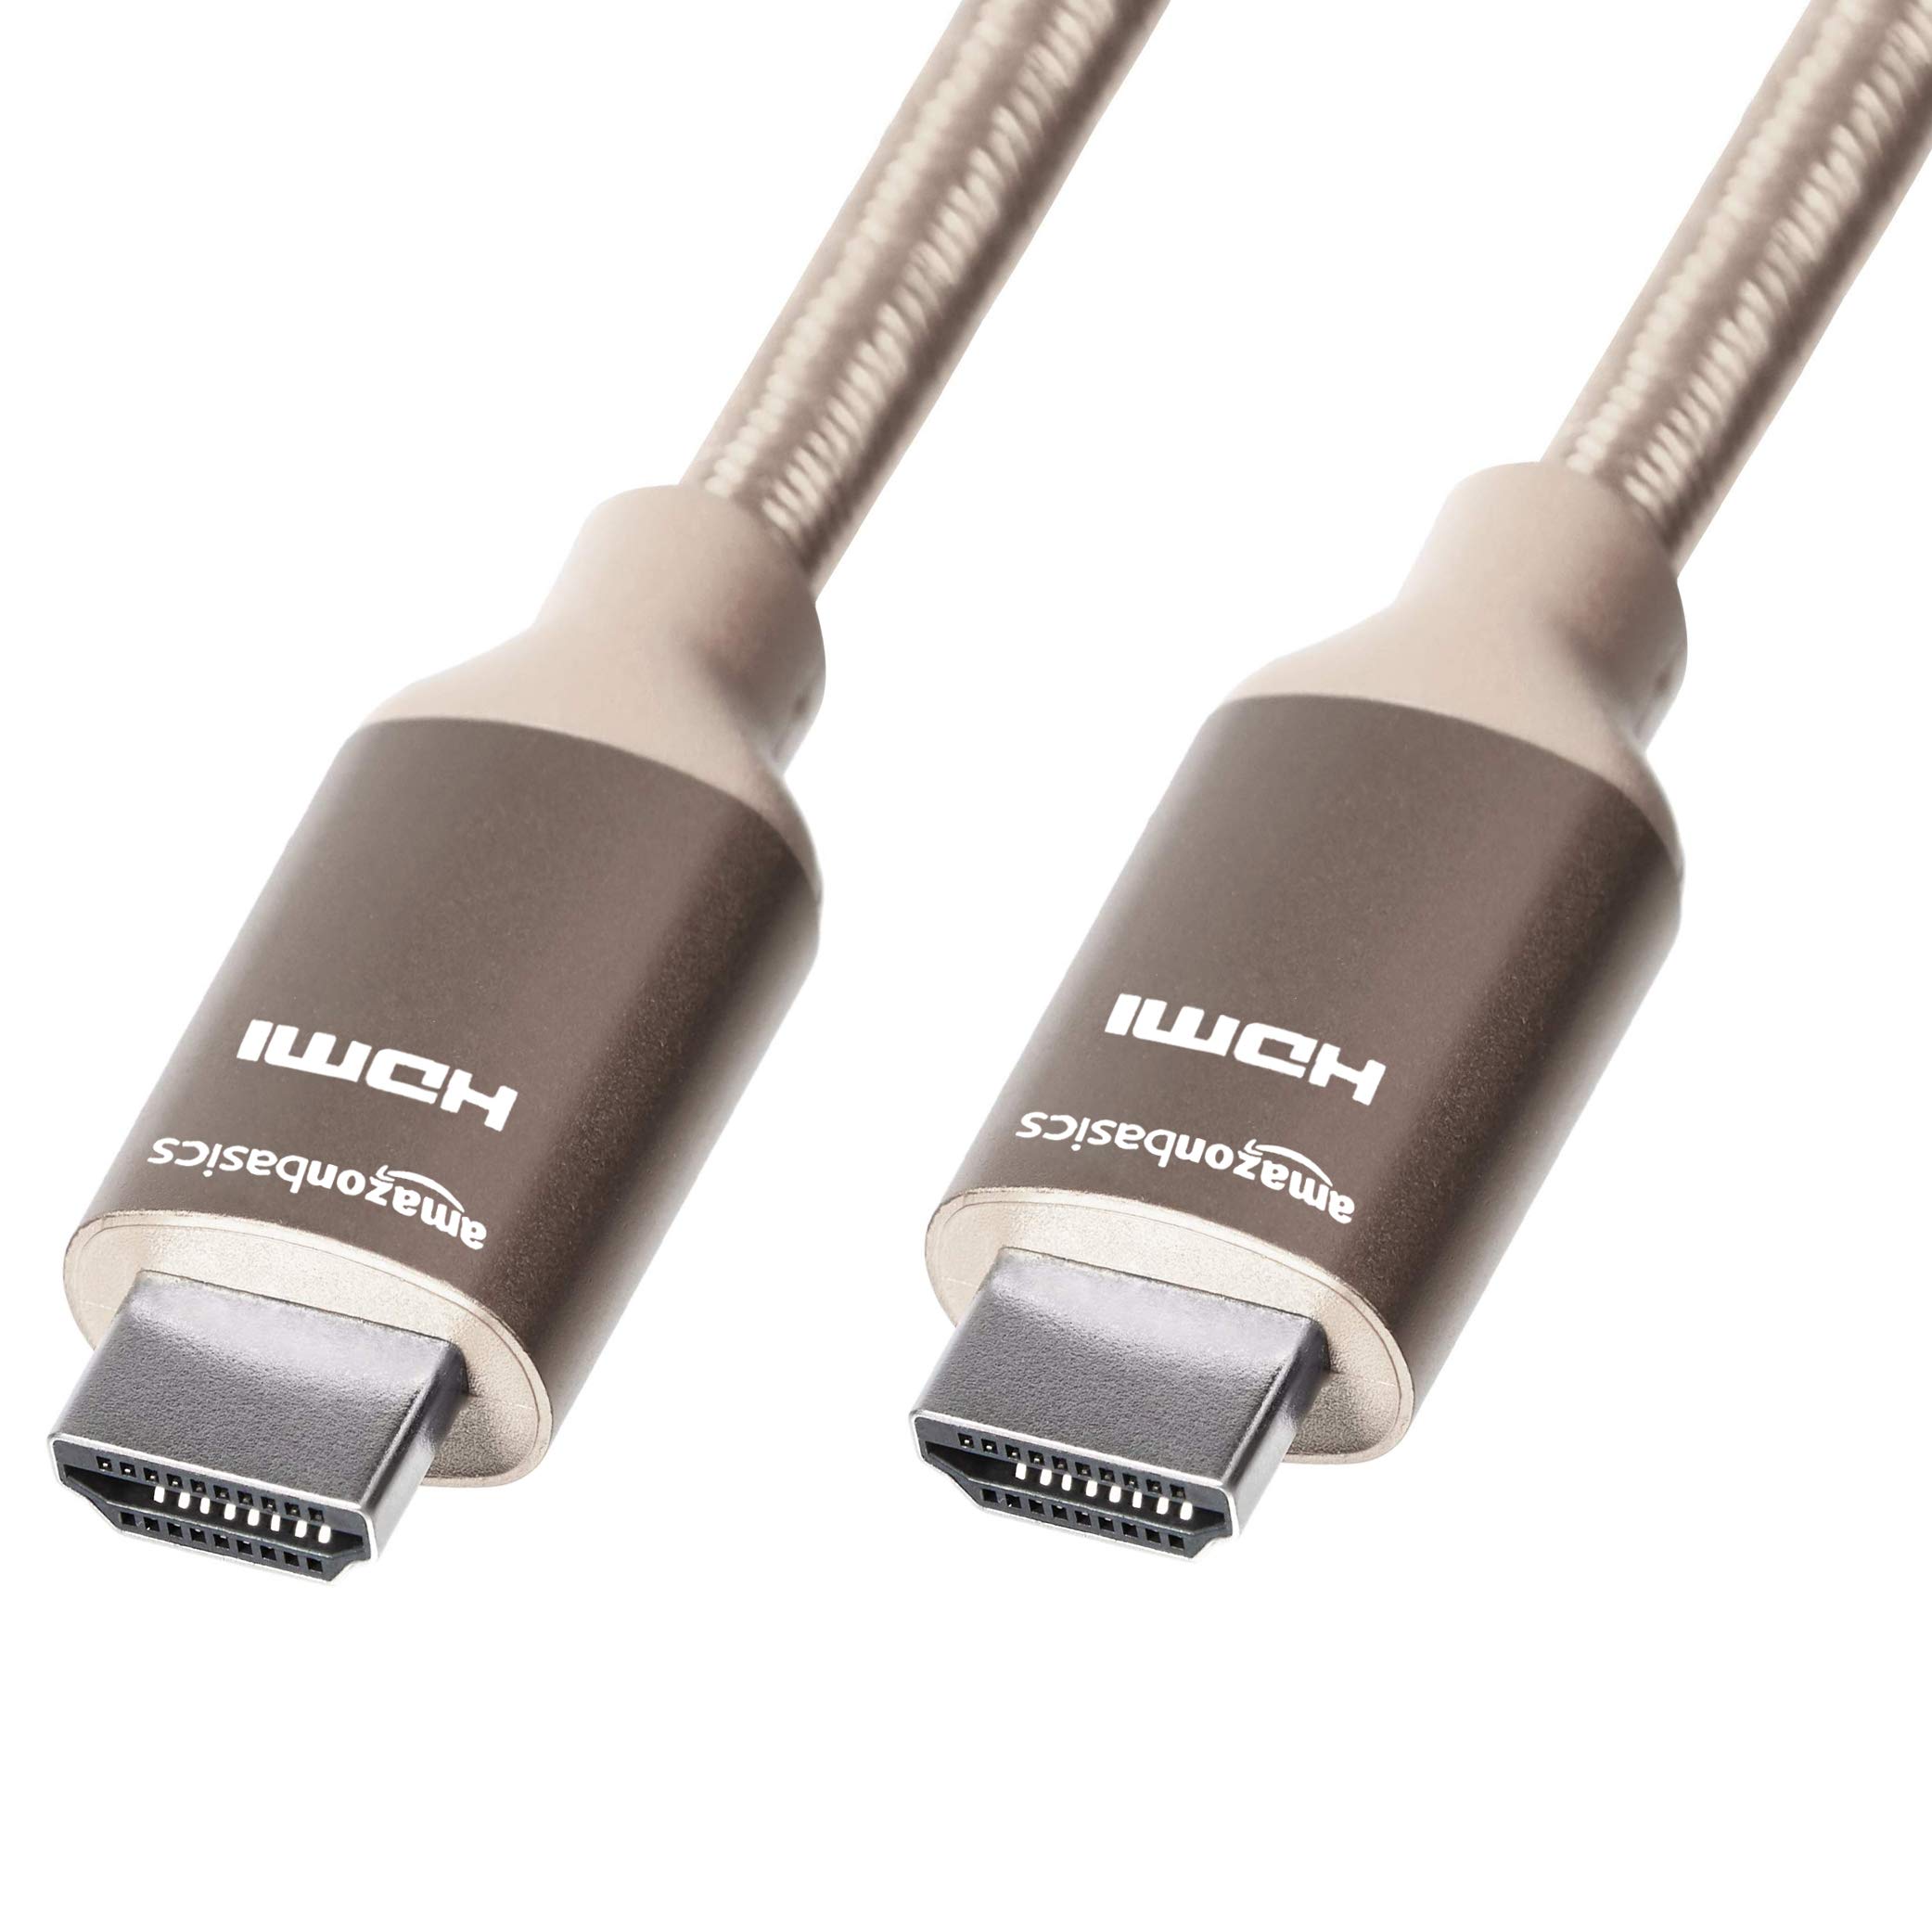 6' Amazon Basics 4K HDMI Cable $2.55 shipped w/ Prime